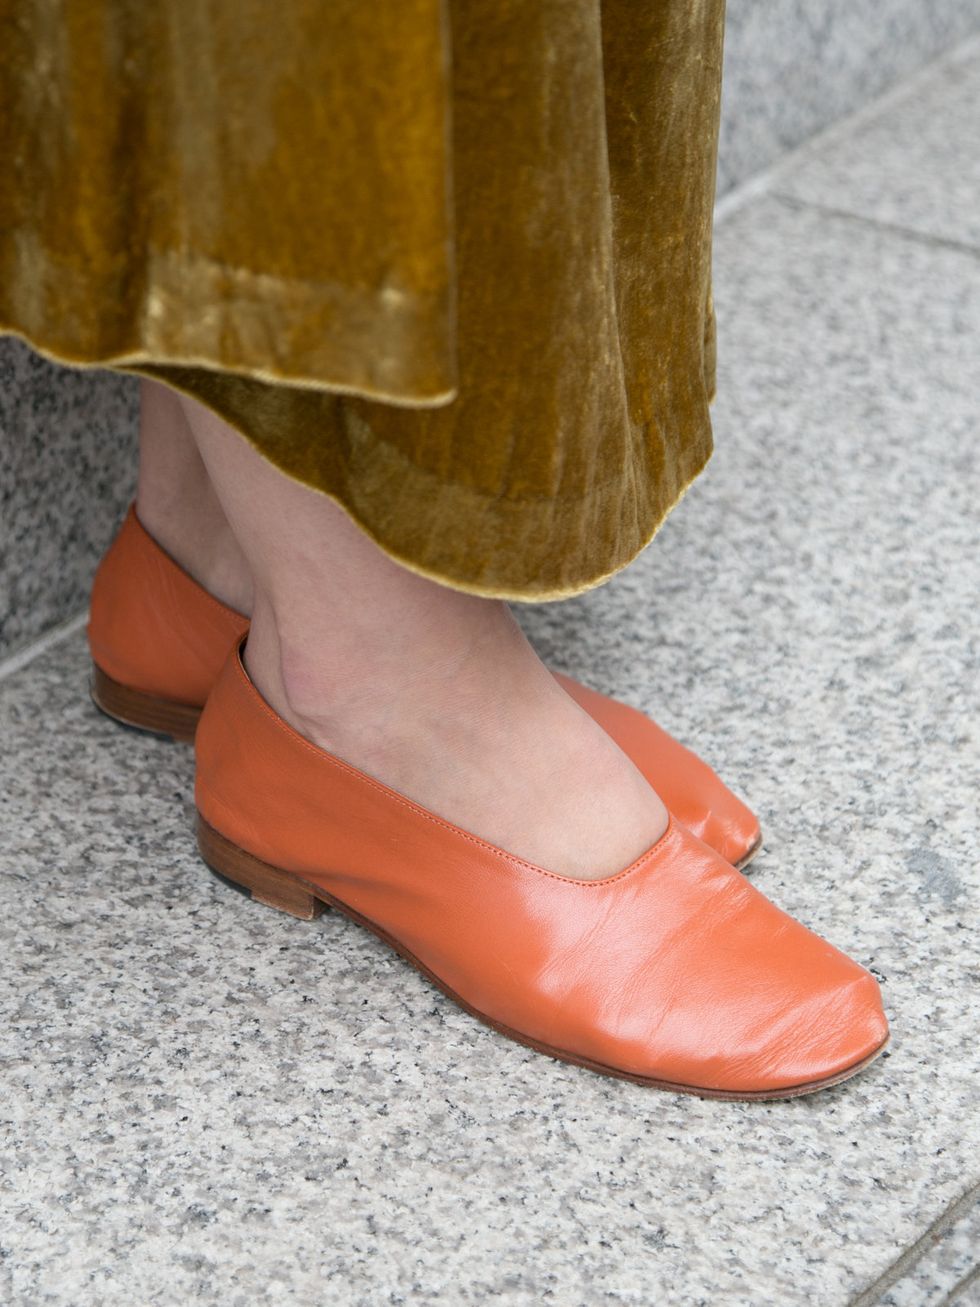 Footwear, Orange, Shoe, Tan, Yellow, Leg, Ballet flat, Human leg, Court shoe, High heels, 